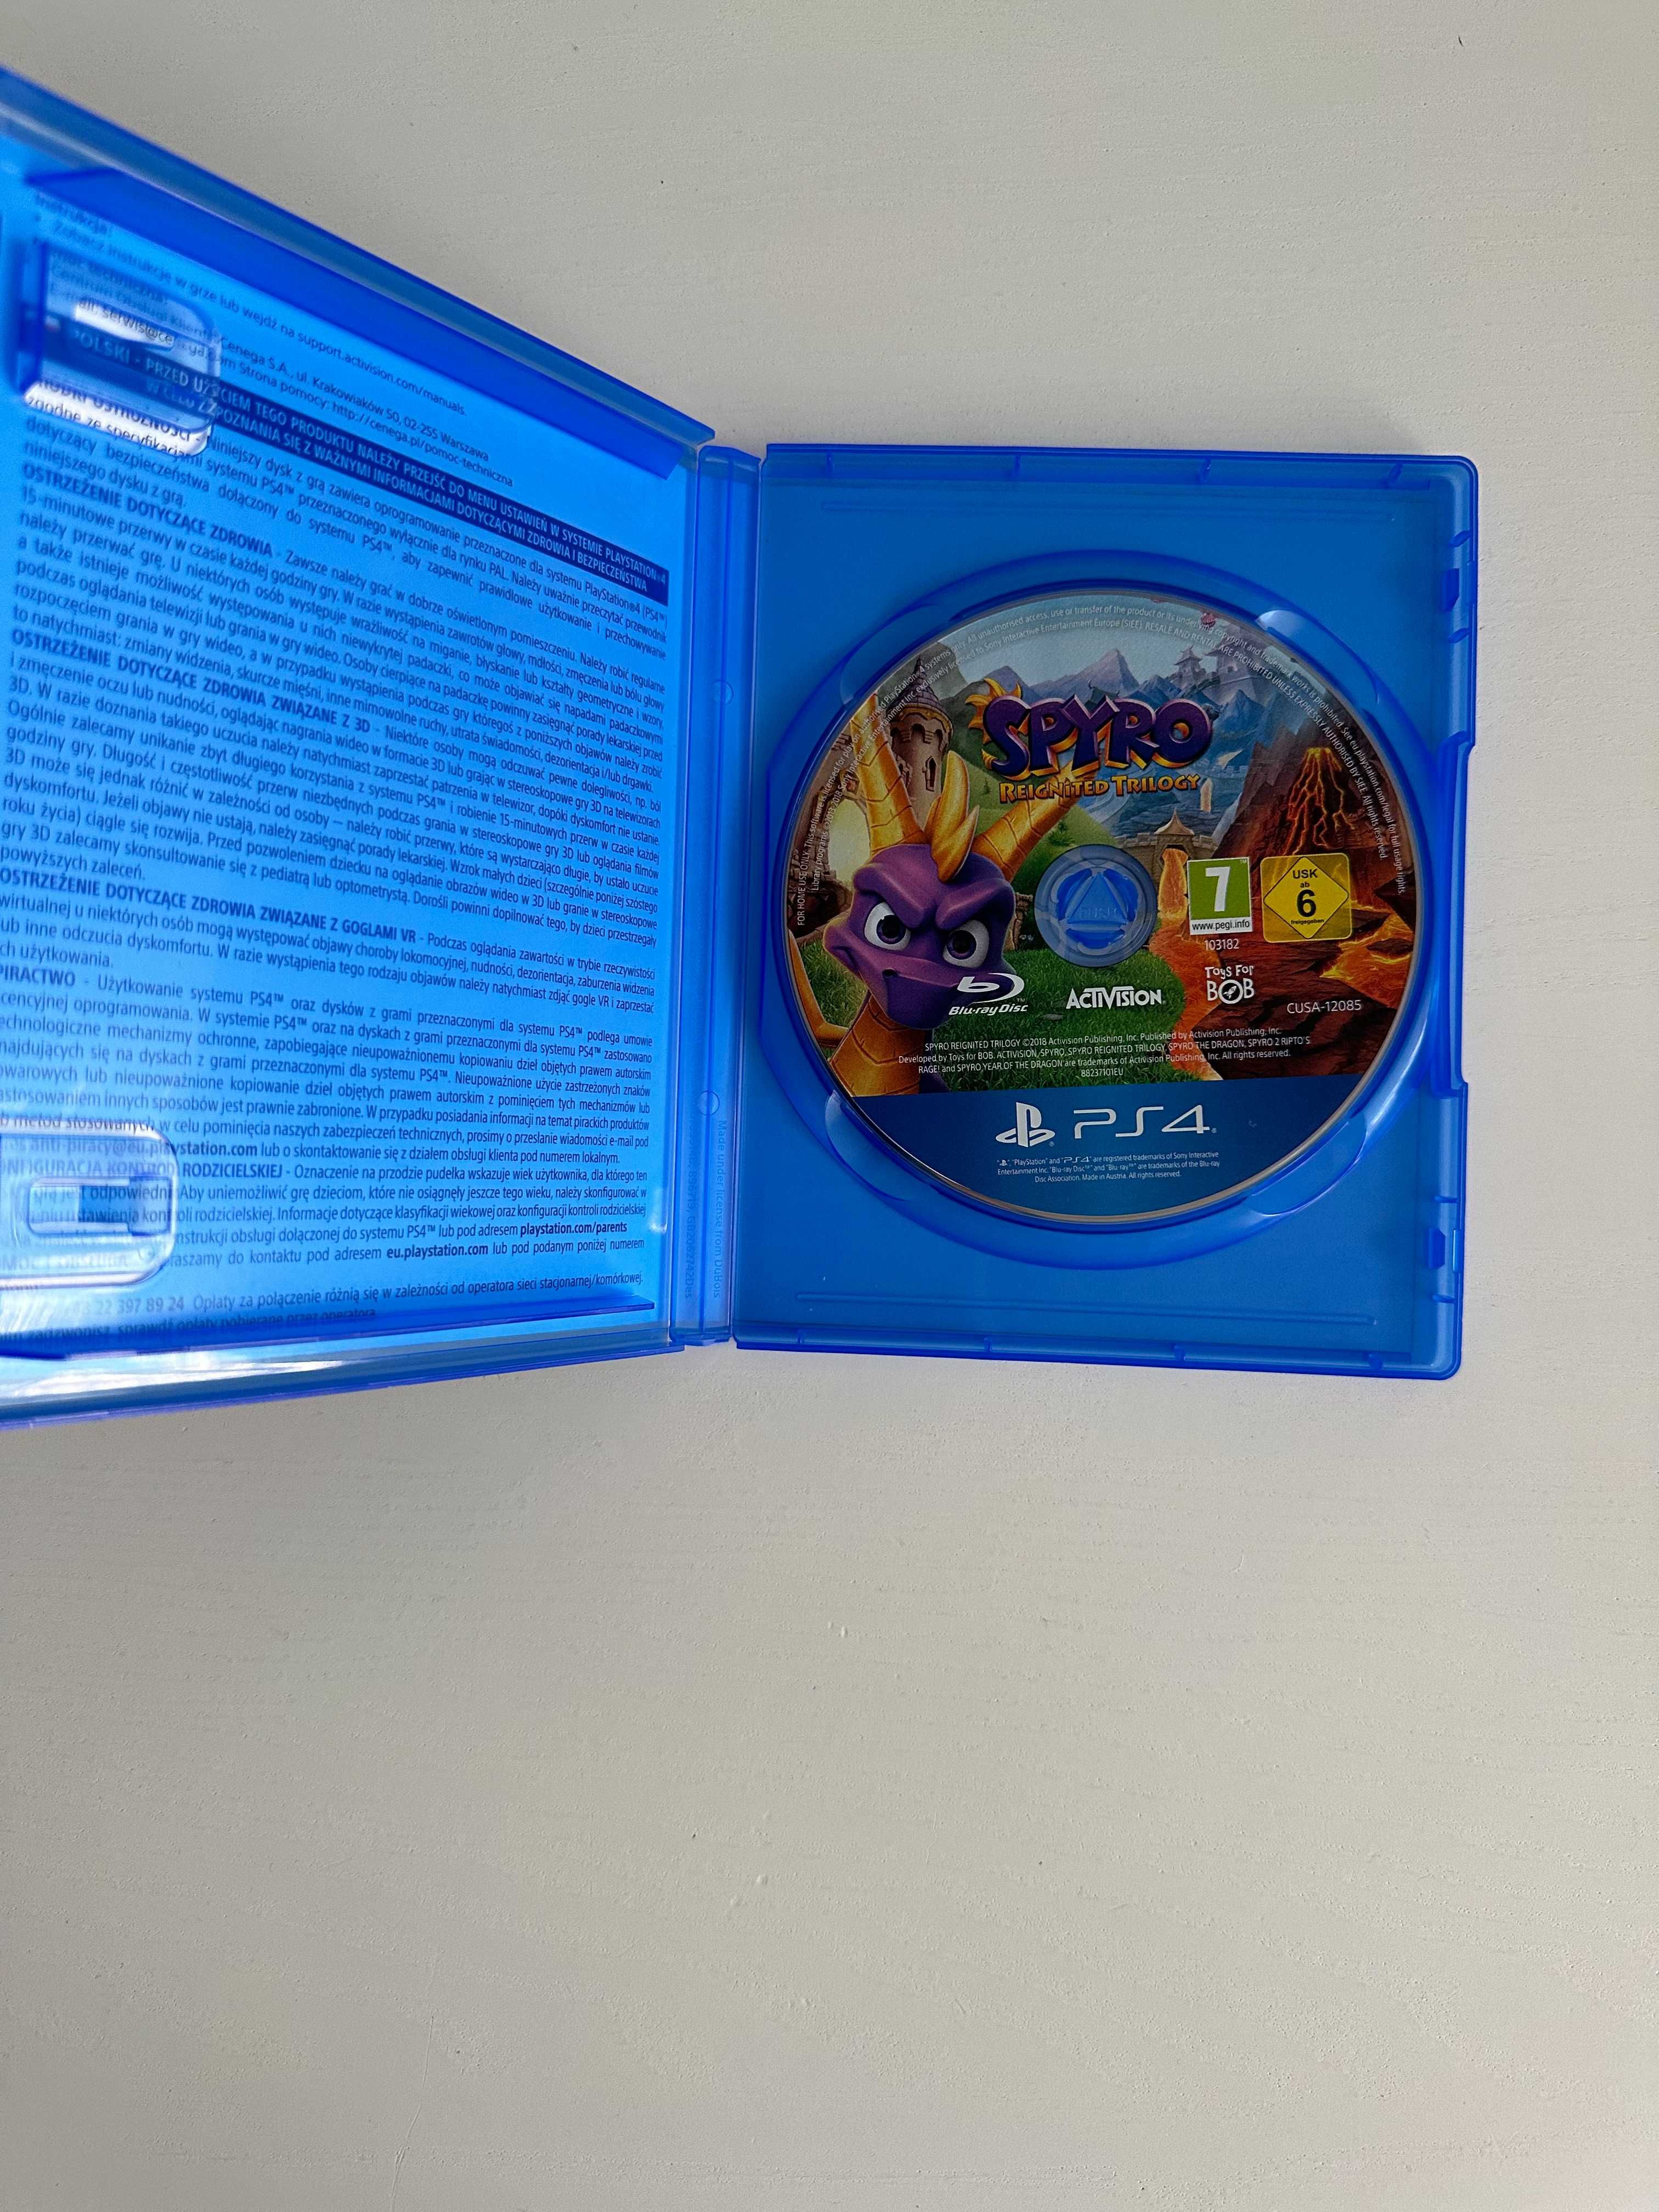 Spyro Reignited Trilogy PS4  + preorder bonus